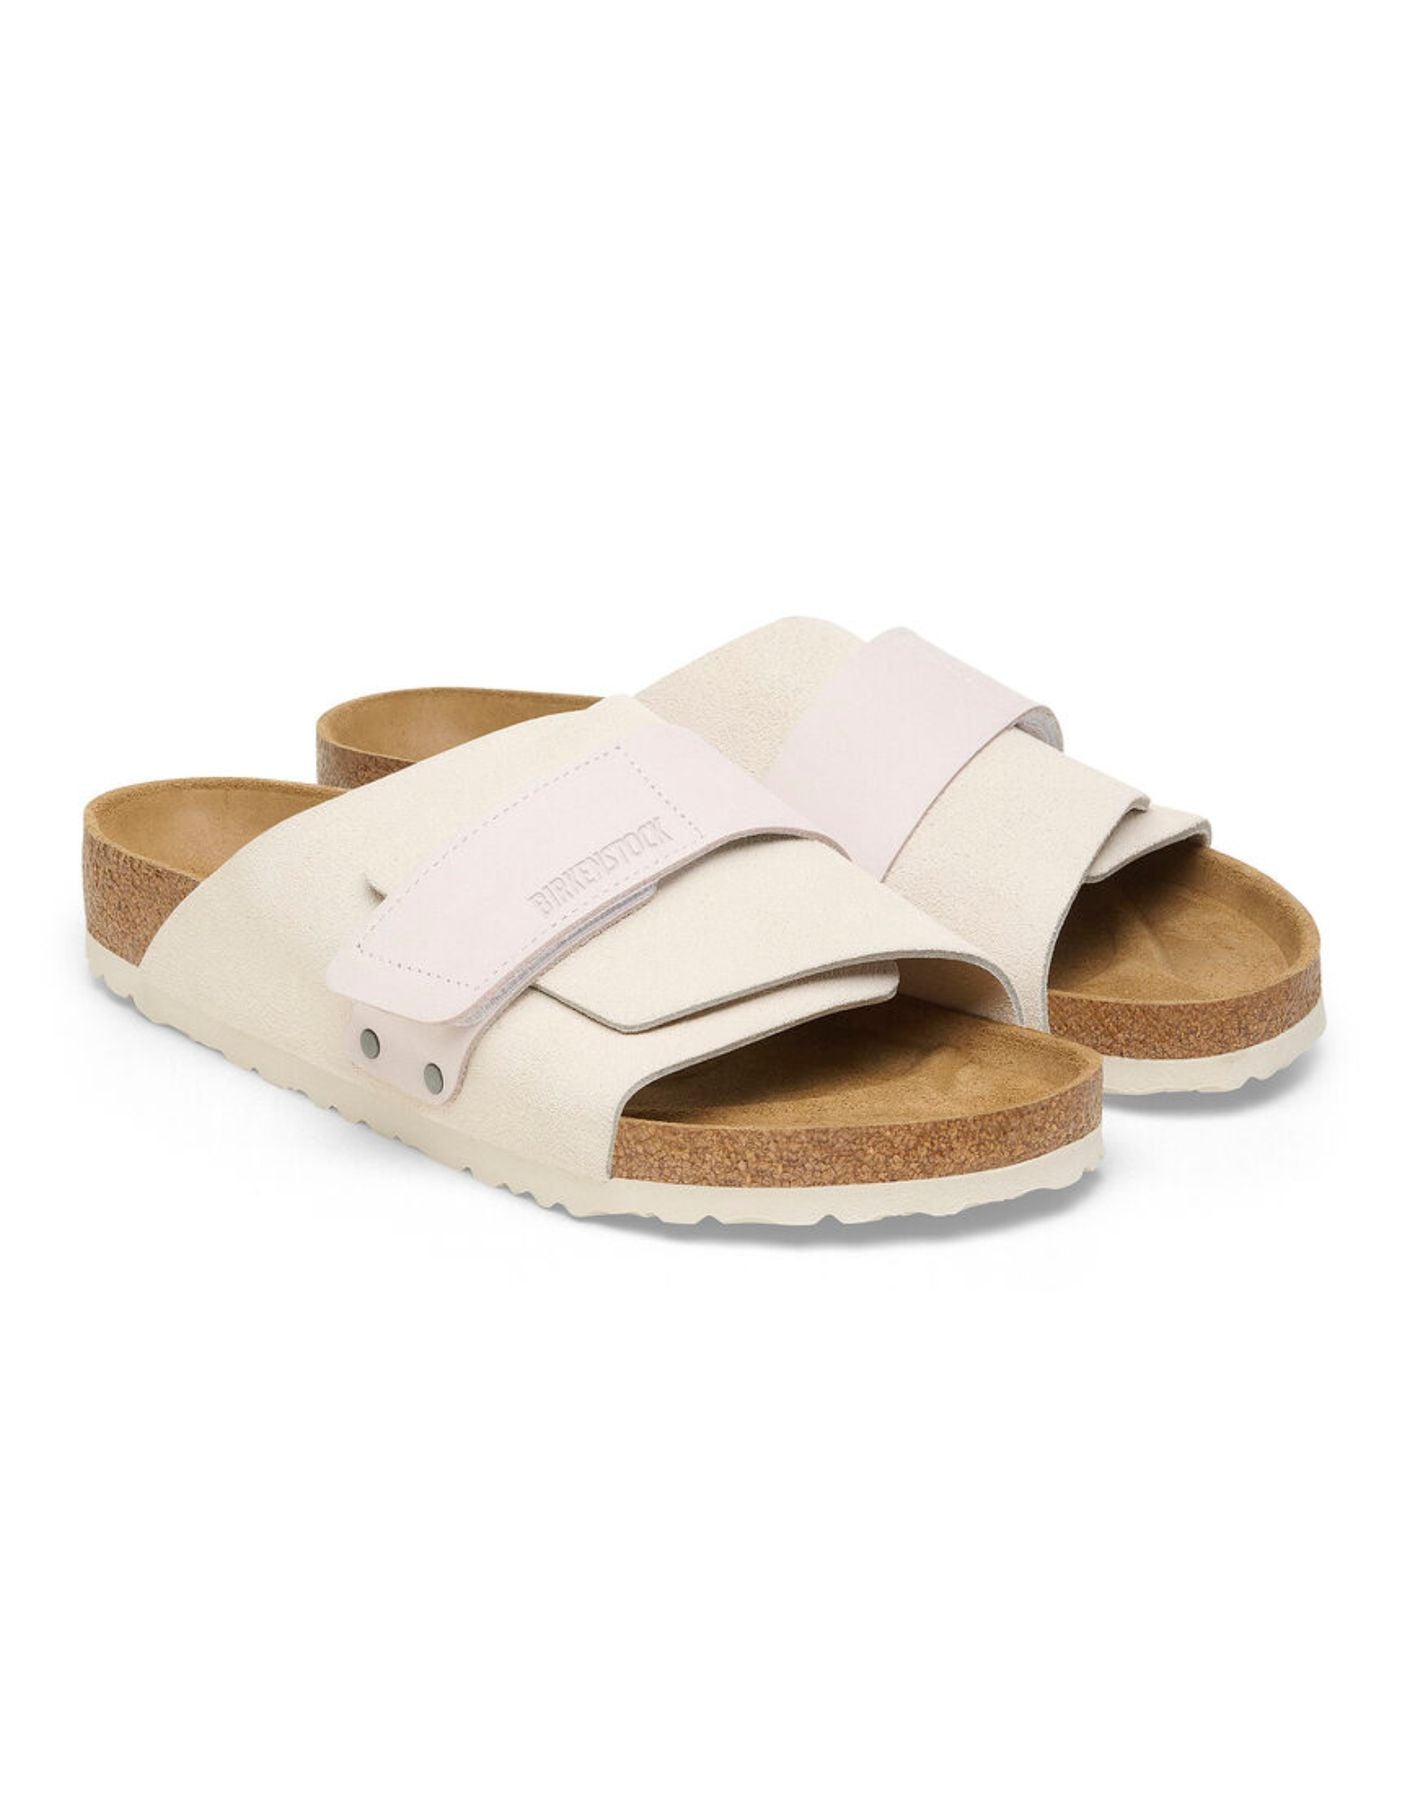 Sandals Woman 1024526 Kyoto White W Birkenstock